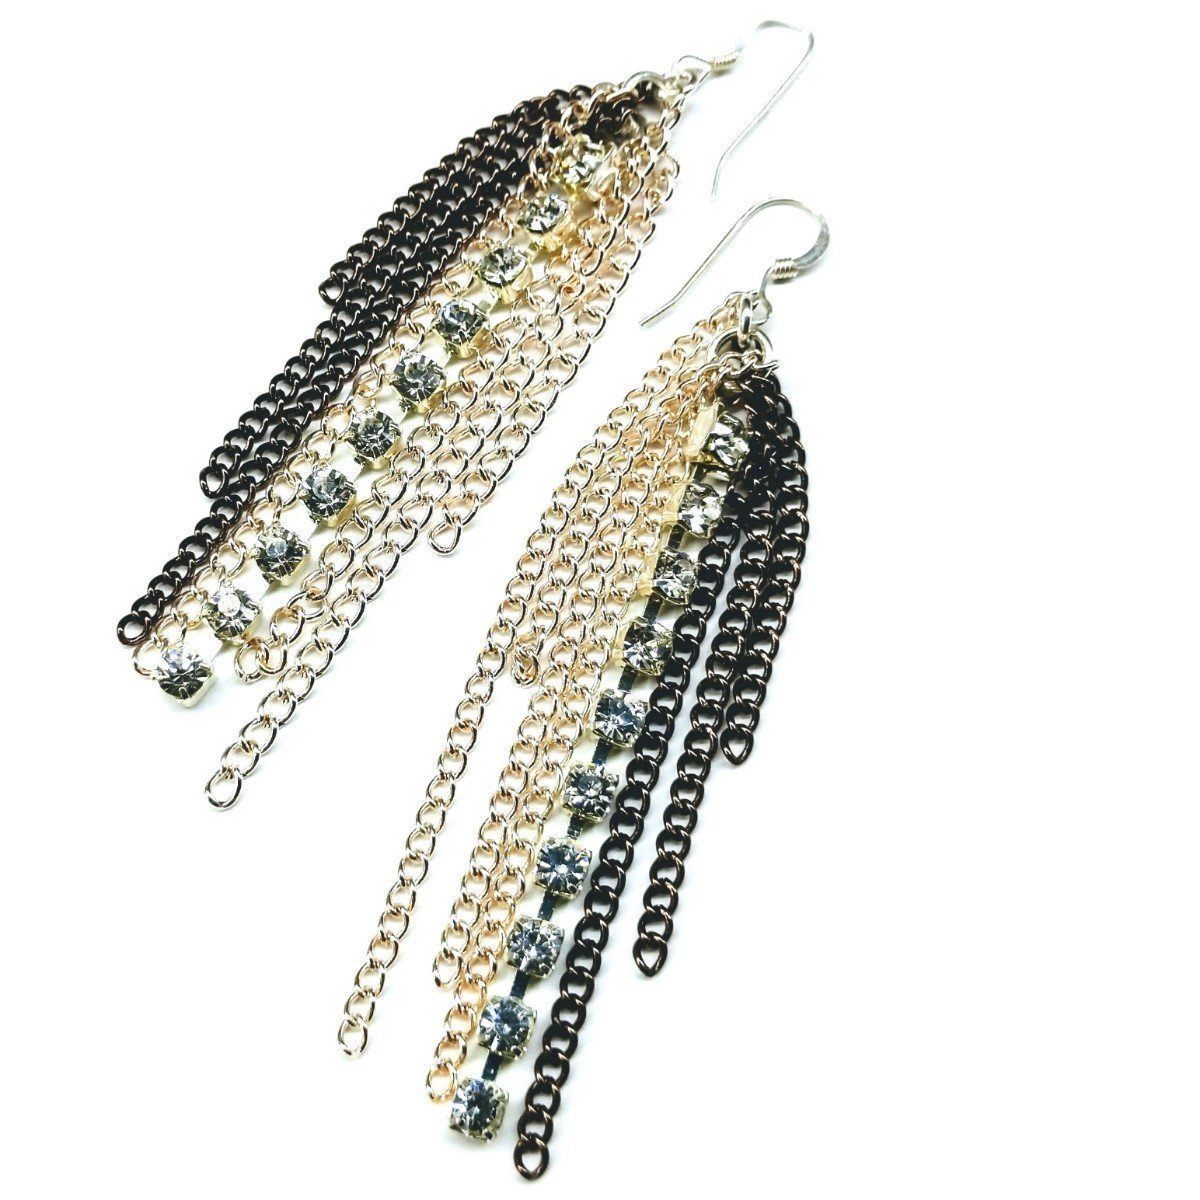 Sparkling Rhinestone Chain Fringe Earrings - Elegant Bridal Jewelry, 3.25" Long, Sterling Silver Ear Wires, Made in USA - Earrings - Bijou Her -  -  - 